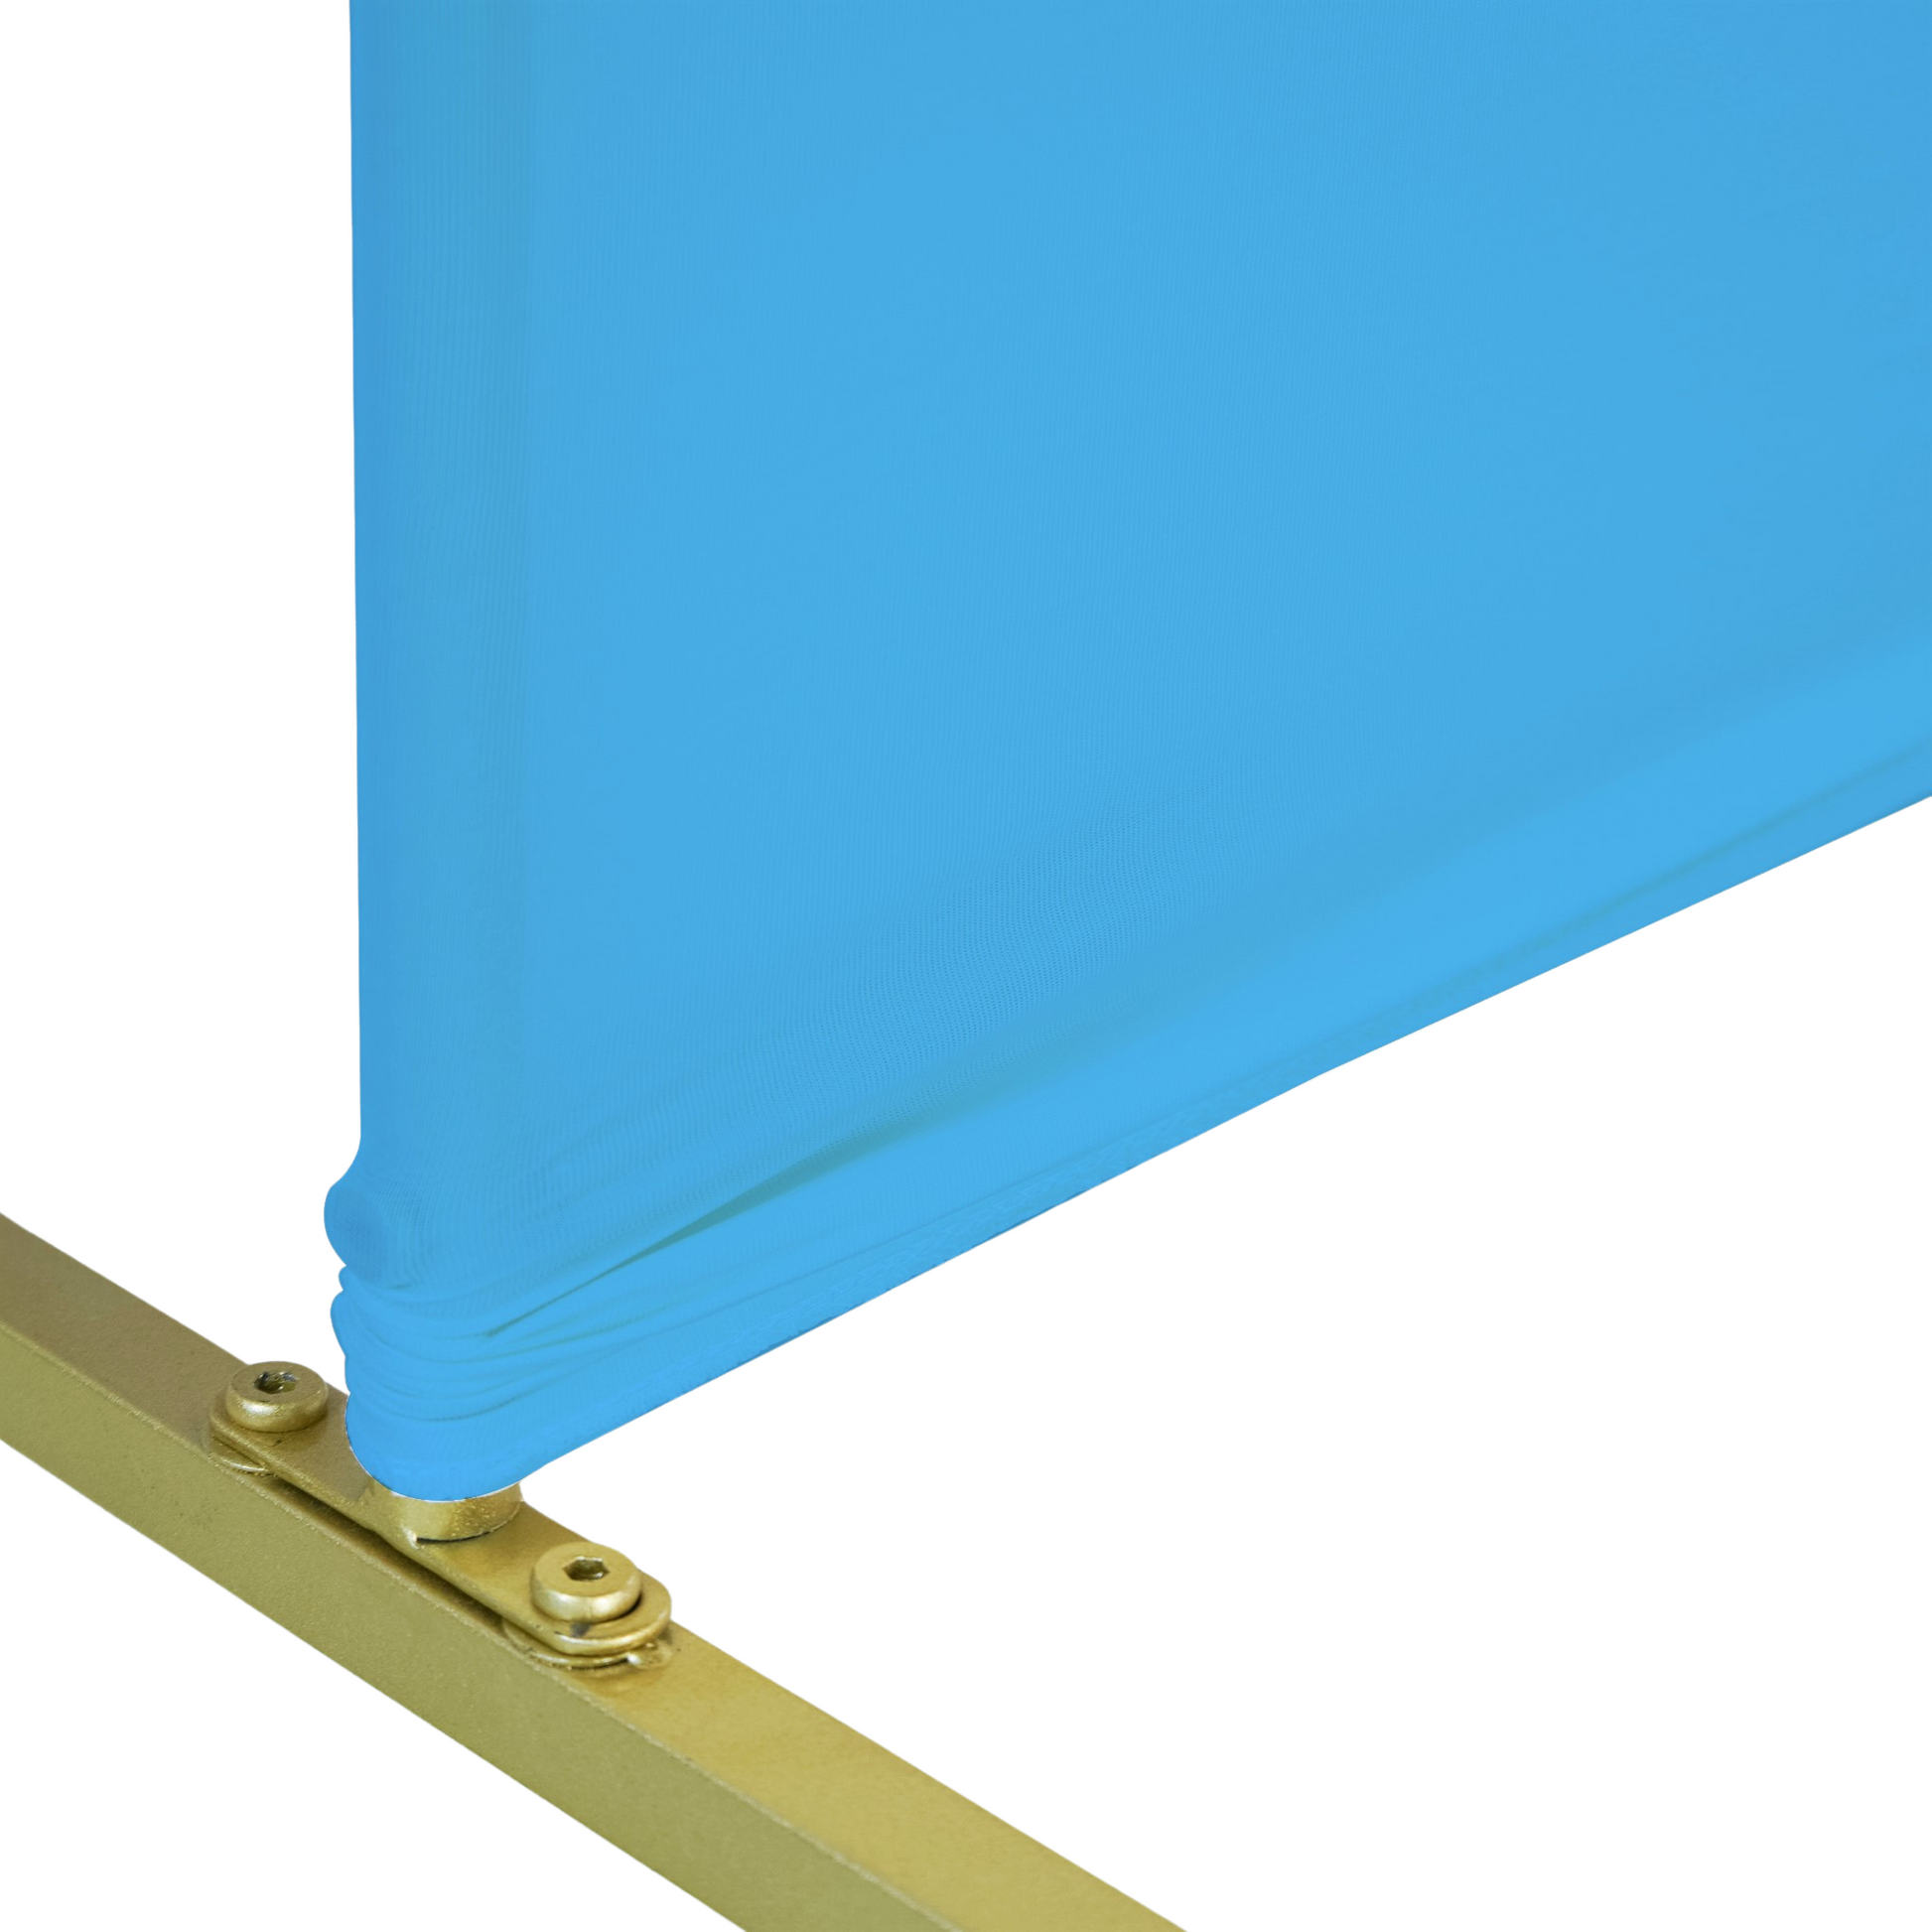 Spandex Arch Covers for Chiara Frame Backdrop 3pc/set - Aqua Blue